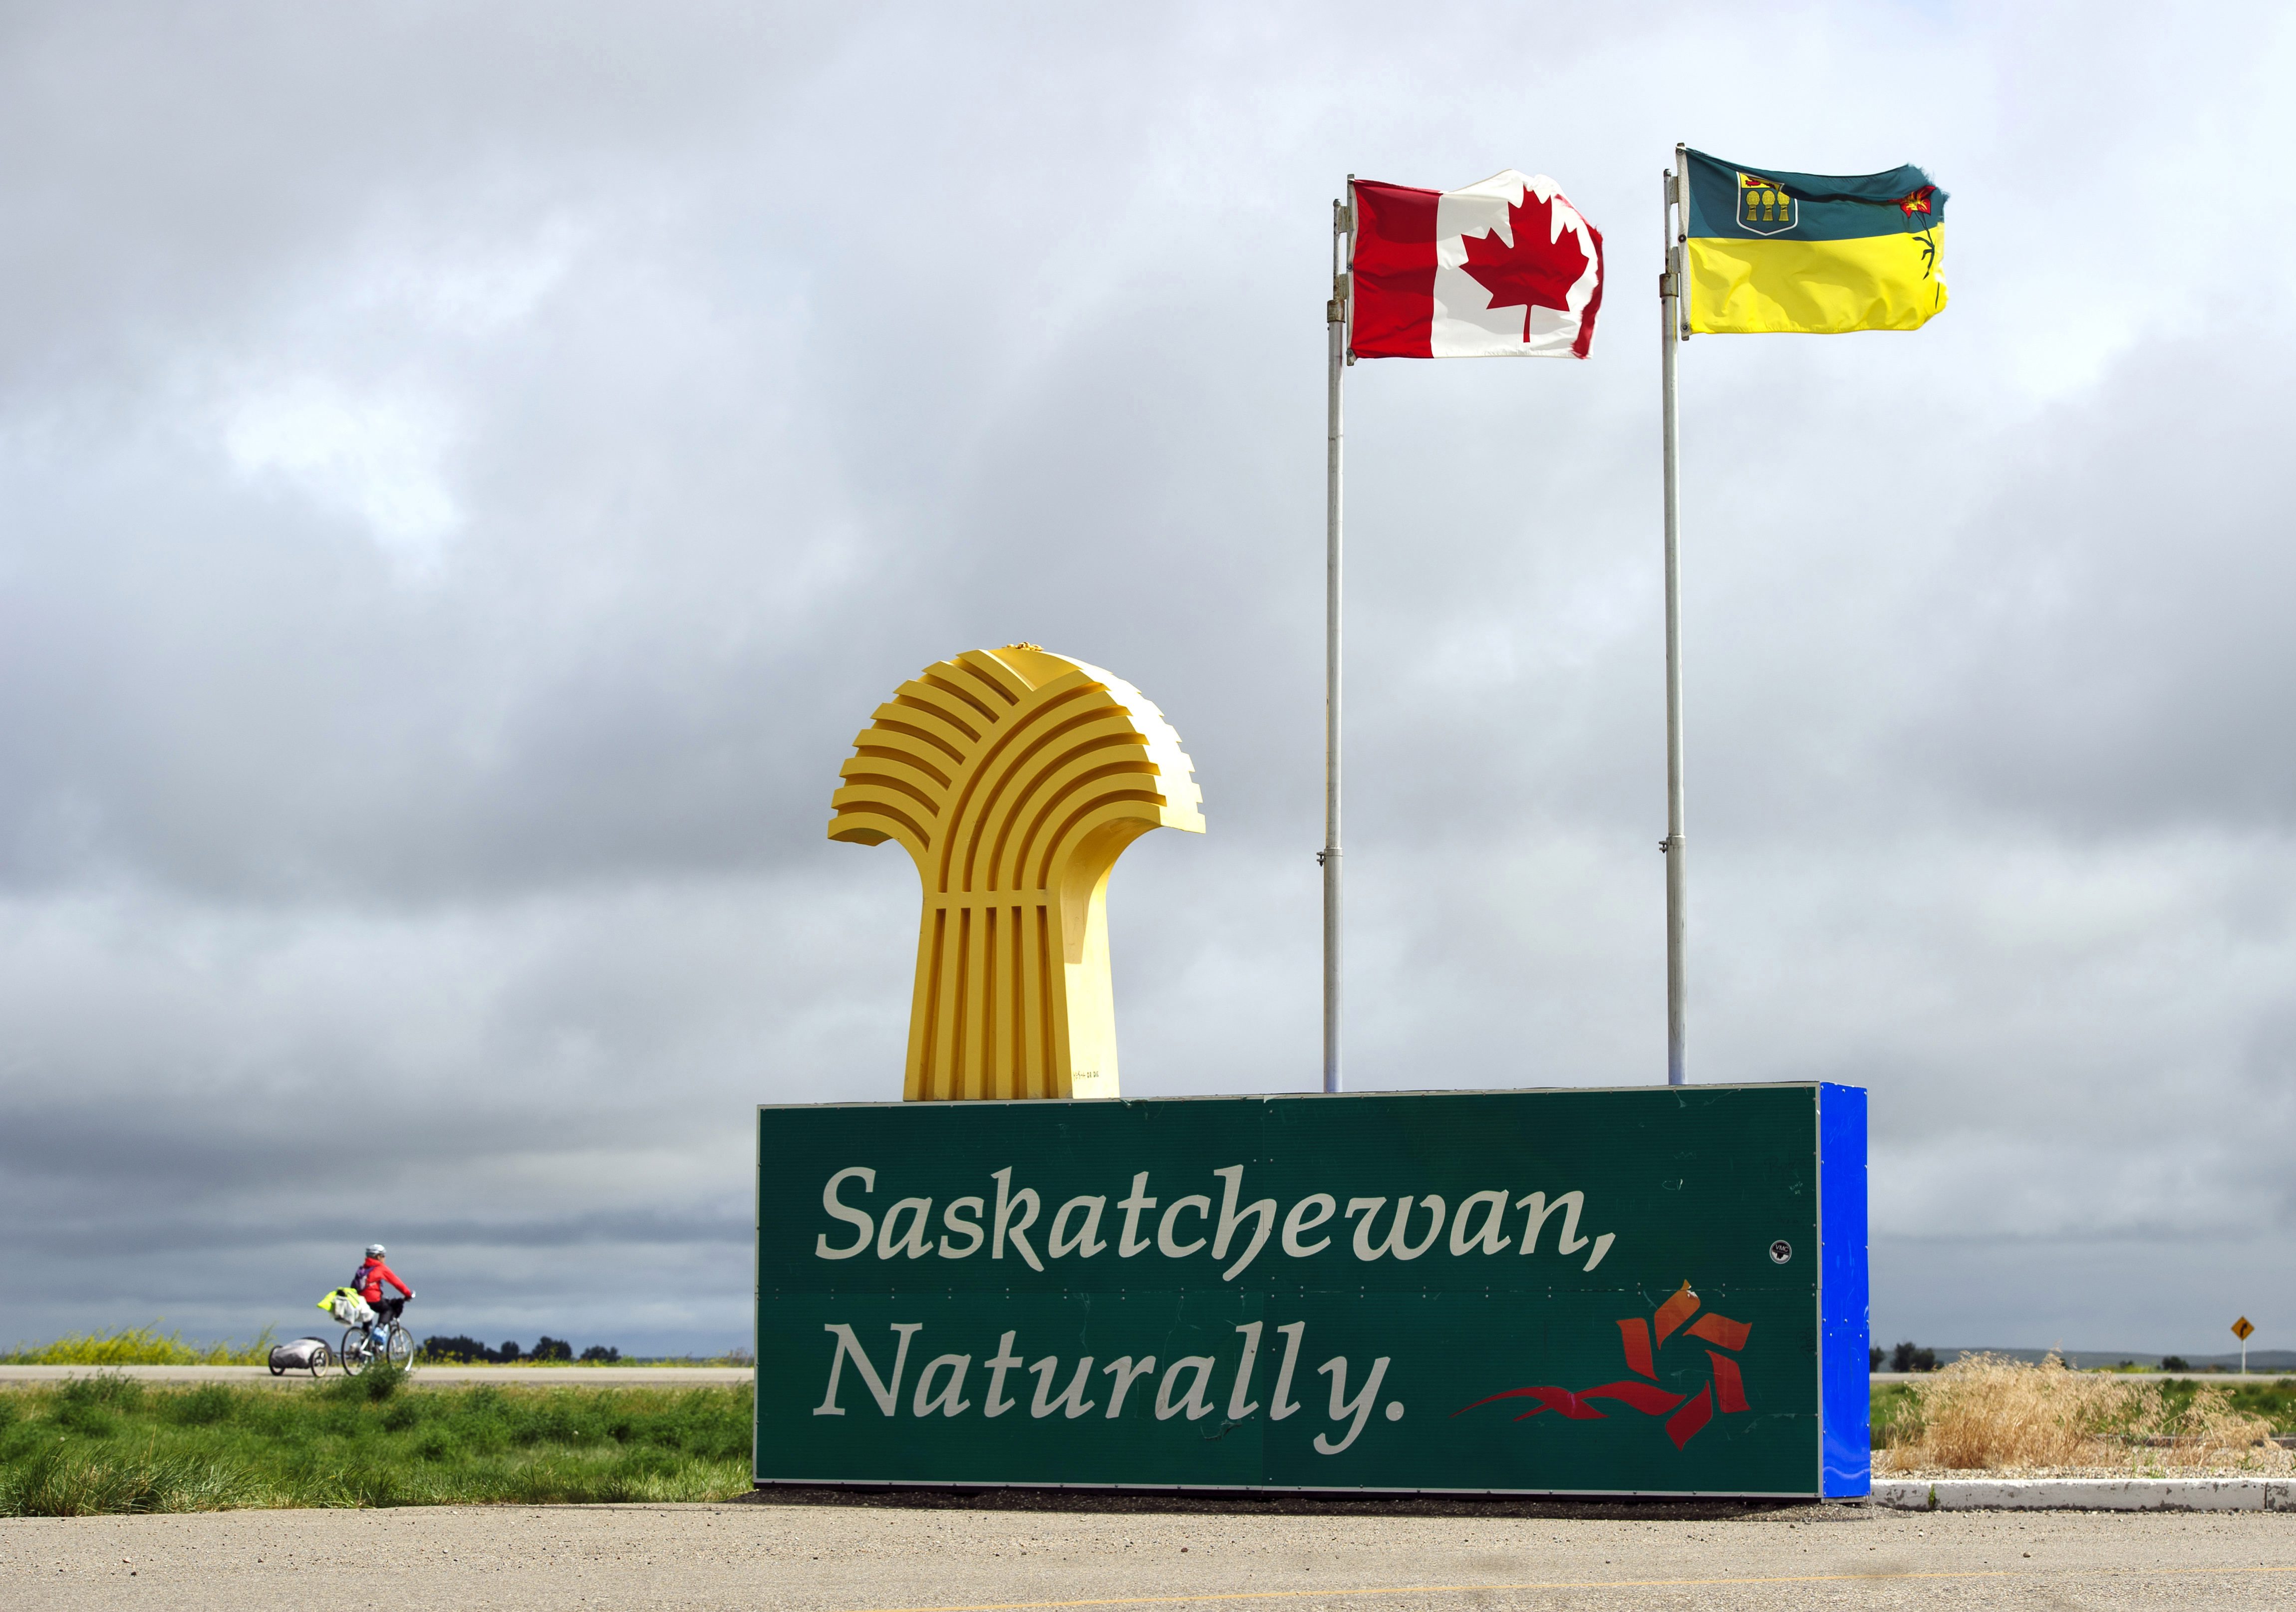 Saskatchewan’s tourism industry is growing